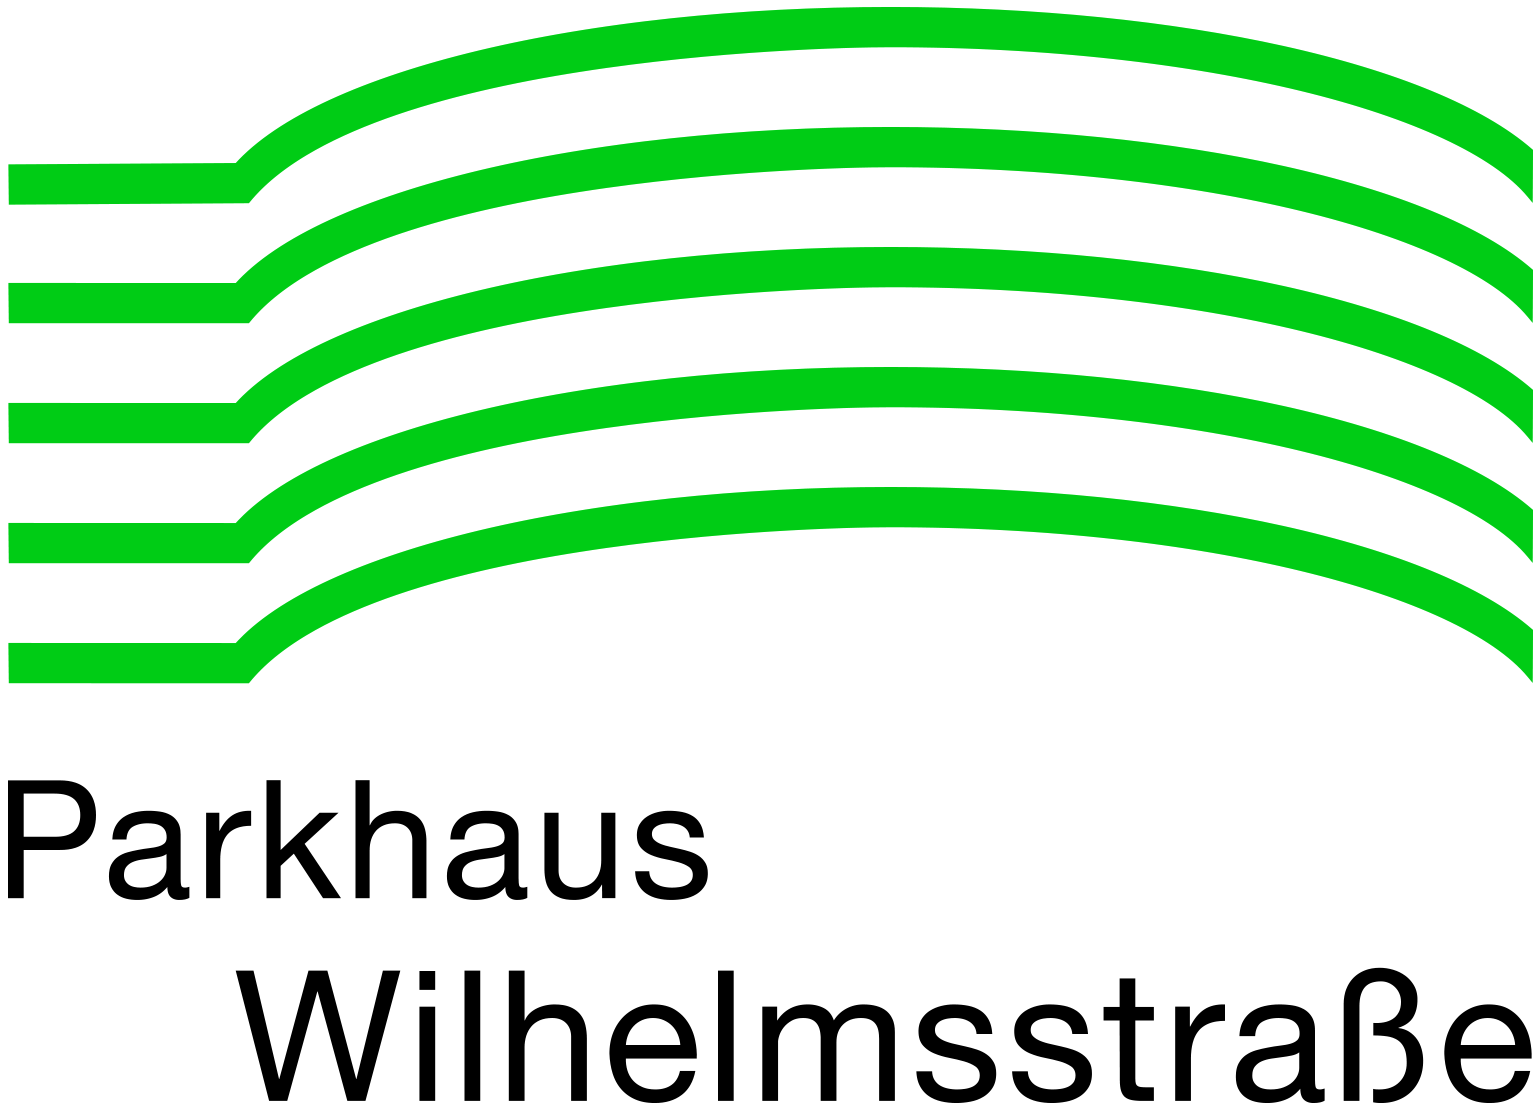 Parkhaus Wilhemsstraße